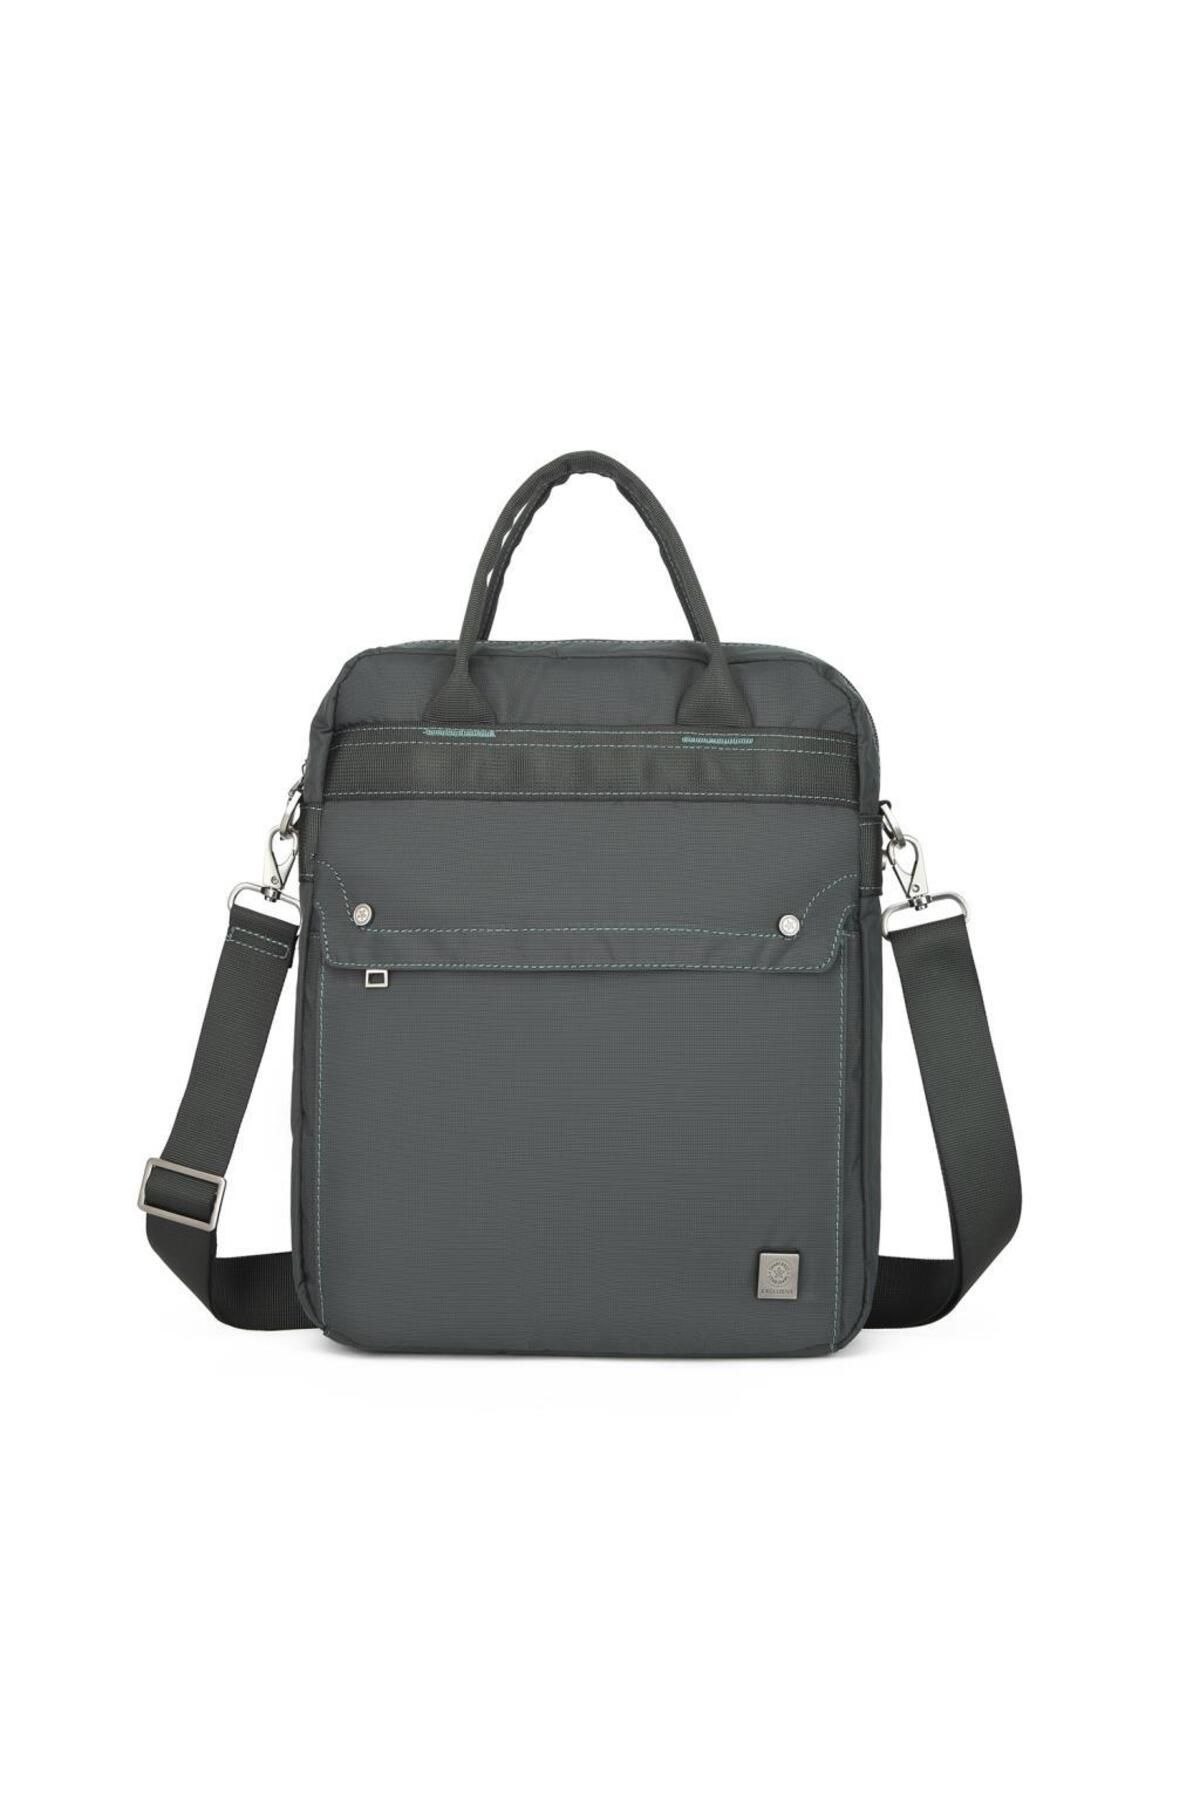 Smart Bags Exclusive Serisi Uniseks Tablet ve Laptop Çantası Smart Bags 8707